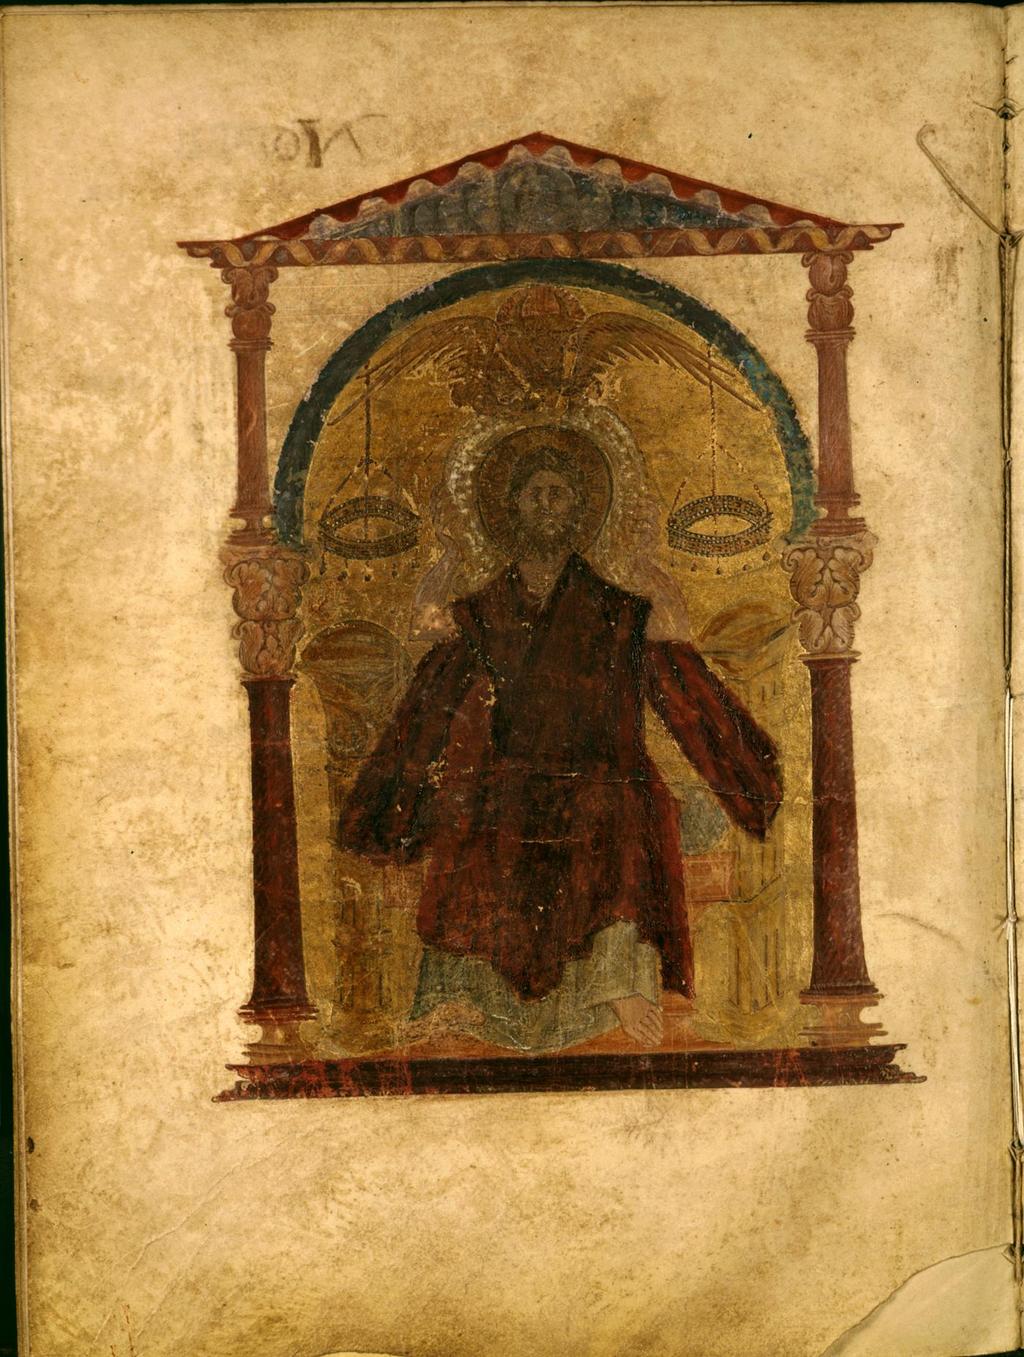 Peregrinations: Journal of Medieval Art and Architecture, Vol. 3, Iss. 1 [2010] Figure 12. Evangelist Luke, Liuthar Gospels, manuscript, c. 990, 29.